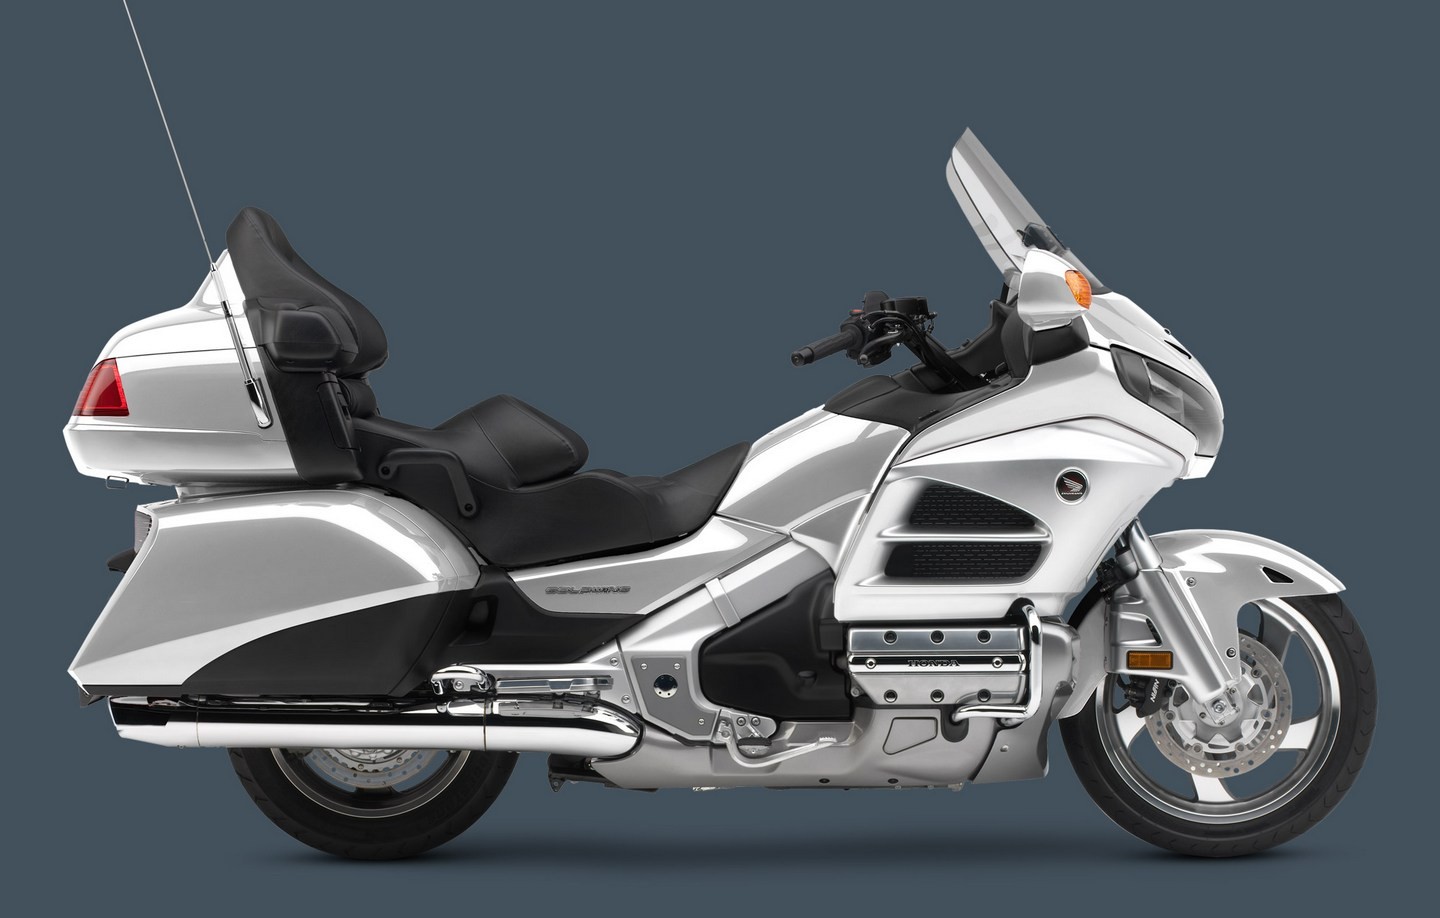 Honda Goldwing Motorcycle Simple Background Vehicle 1440x918